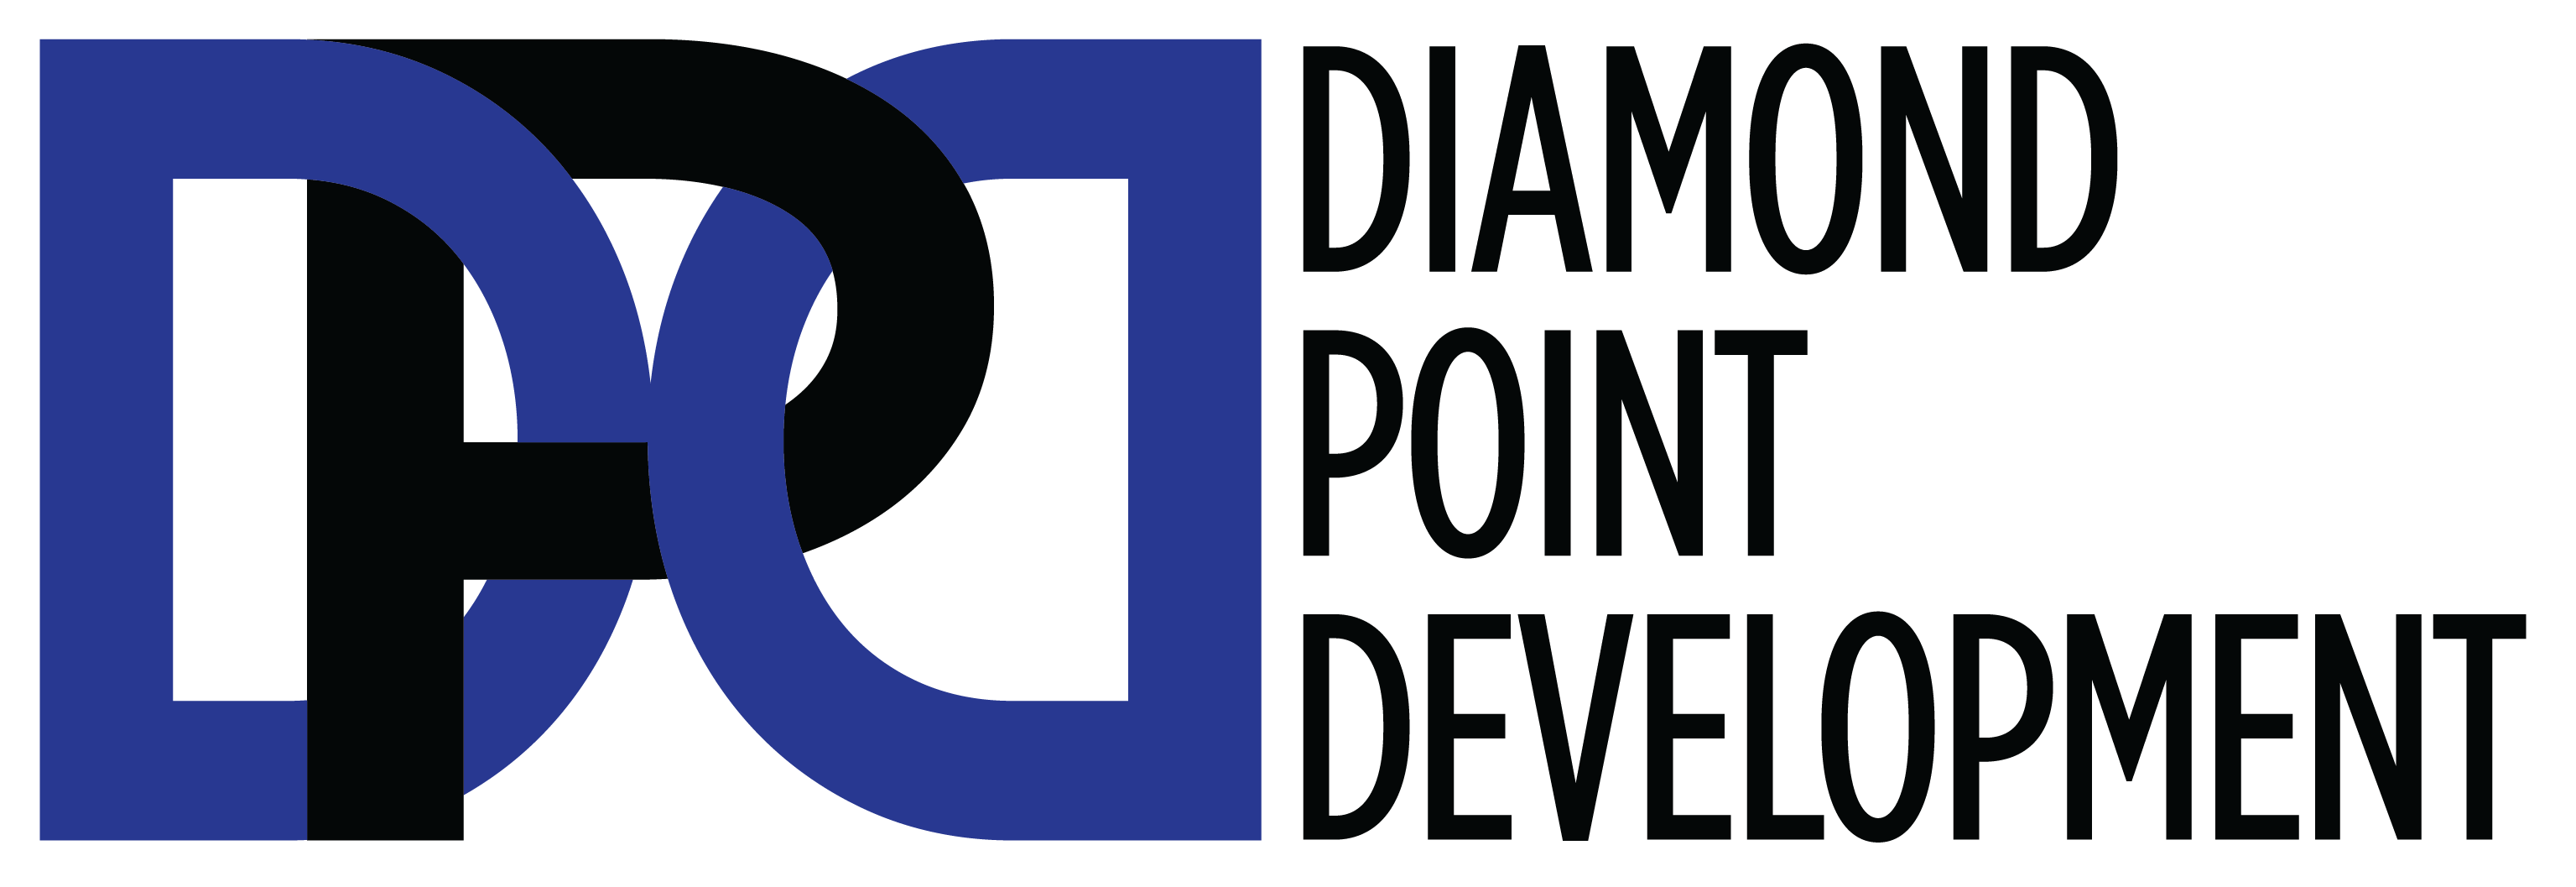 Diamond Point Development